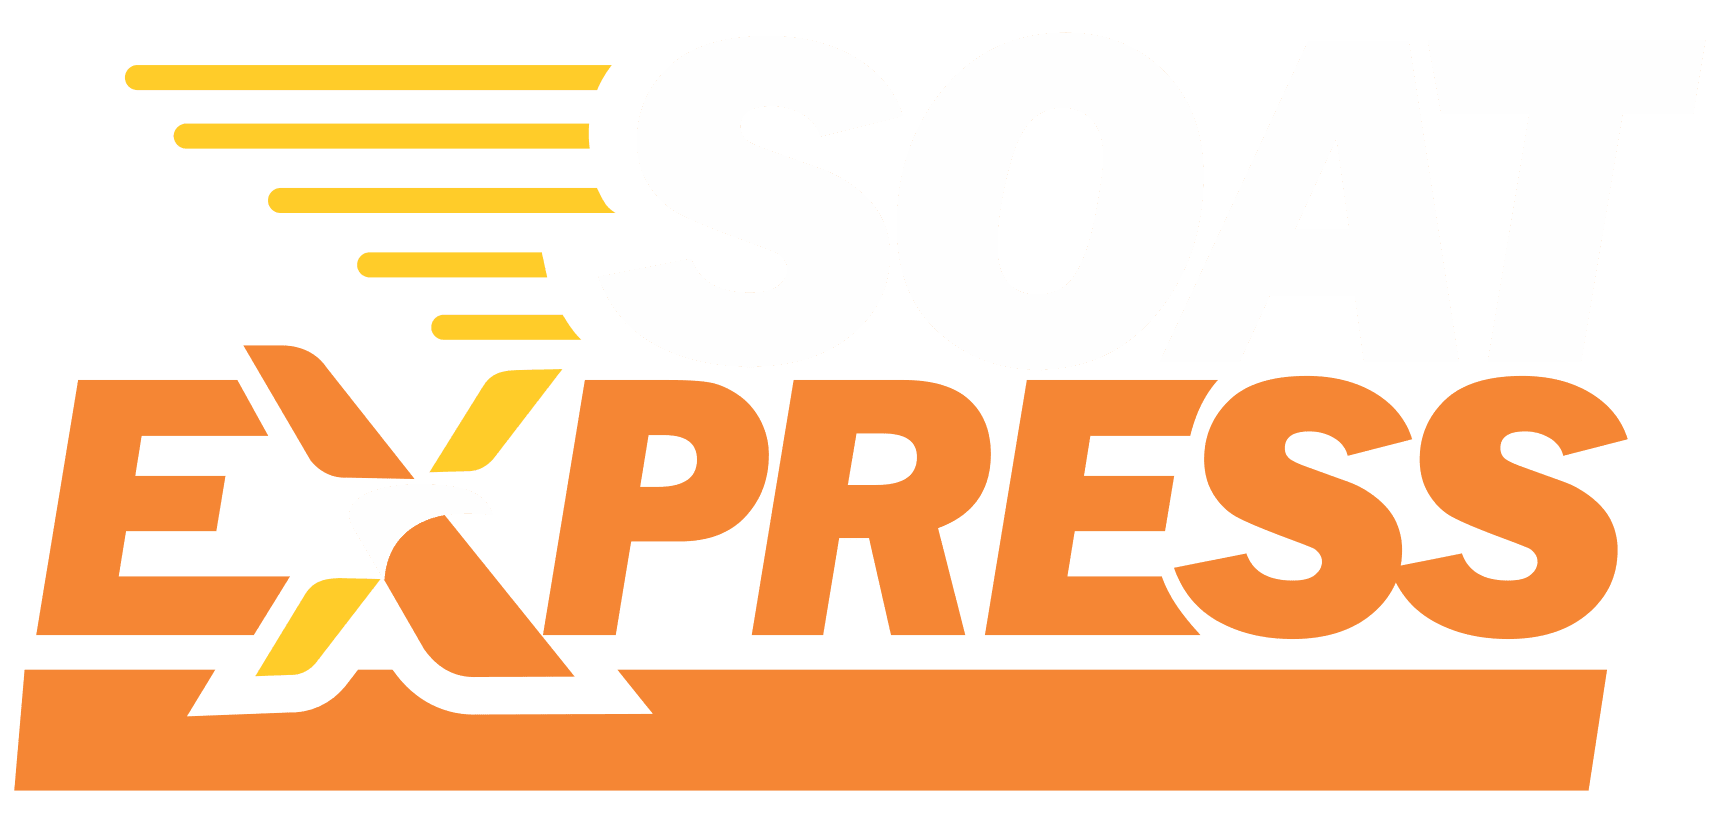 SOAT Express